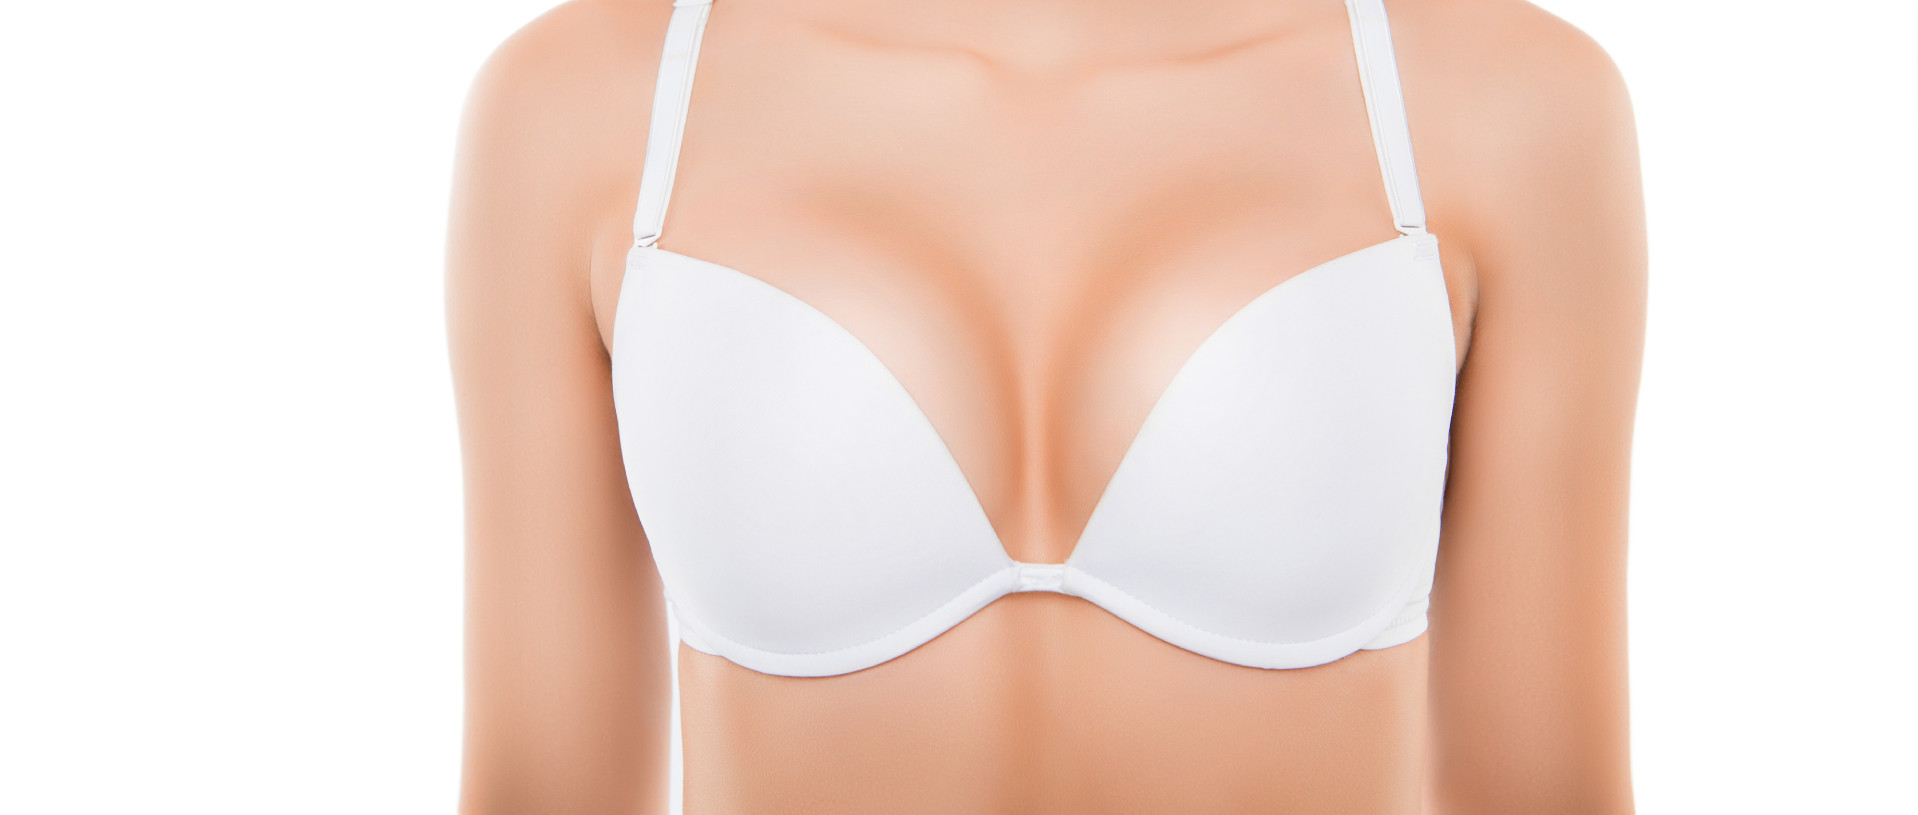 boob lift with implants surgery | augmentation mastopexy